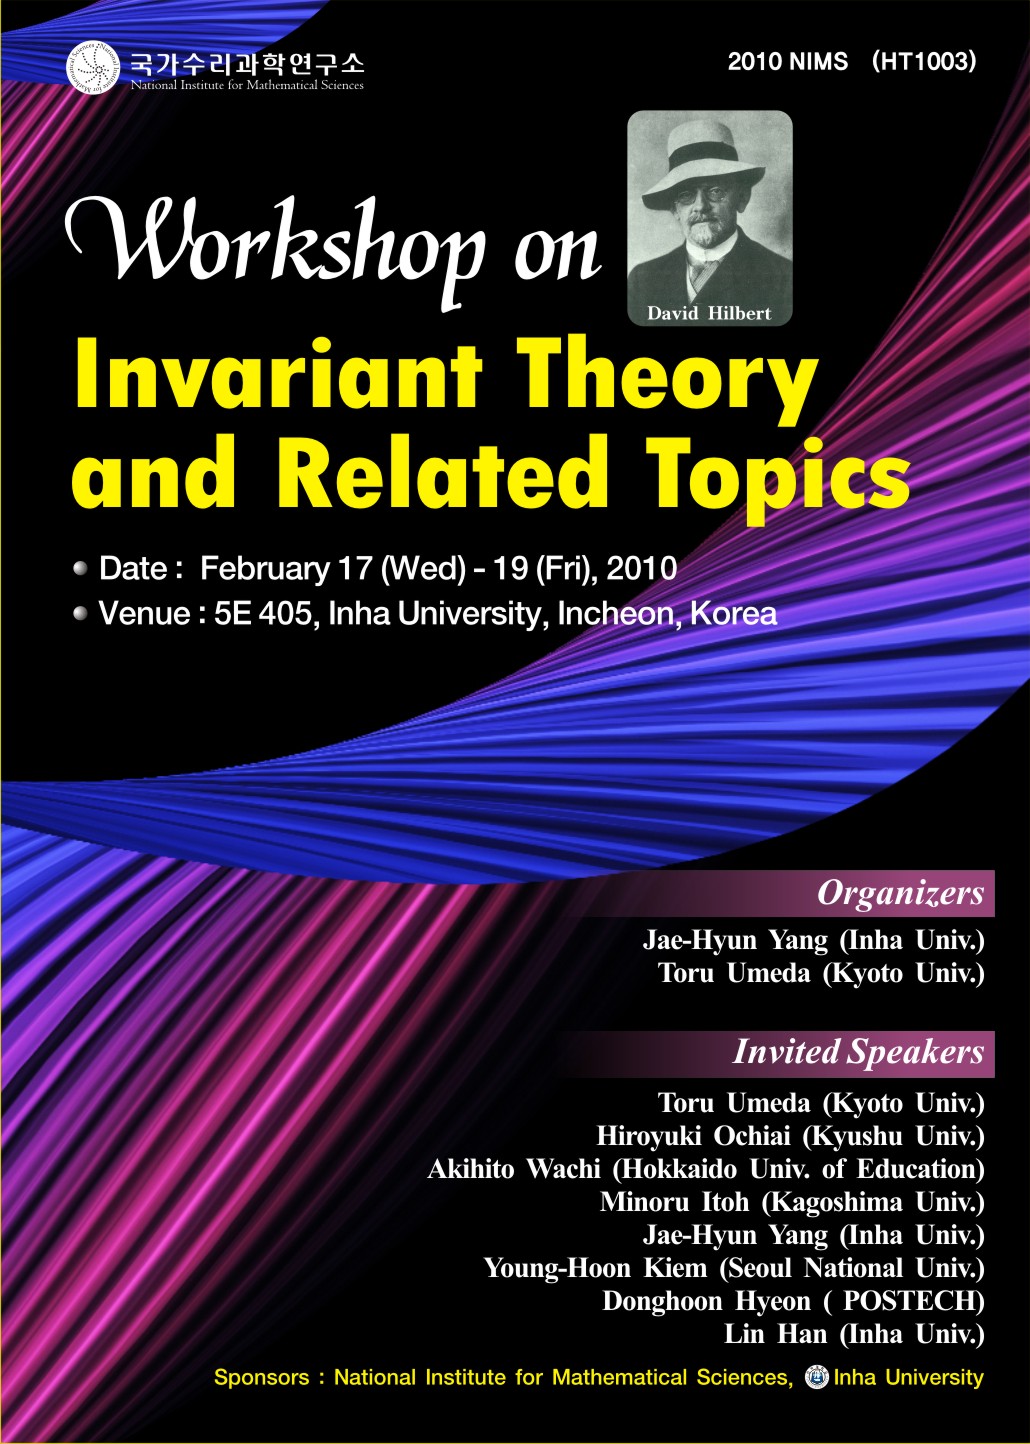 2010 NIMS Hot Topics Workshop "Invariant Theory"